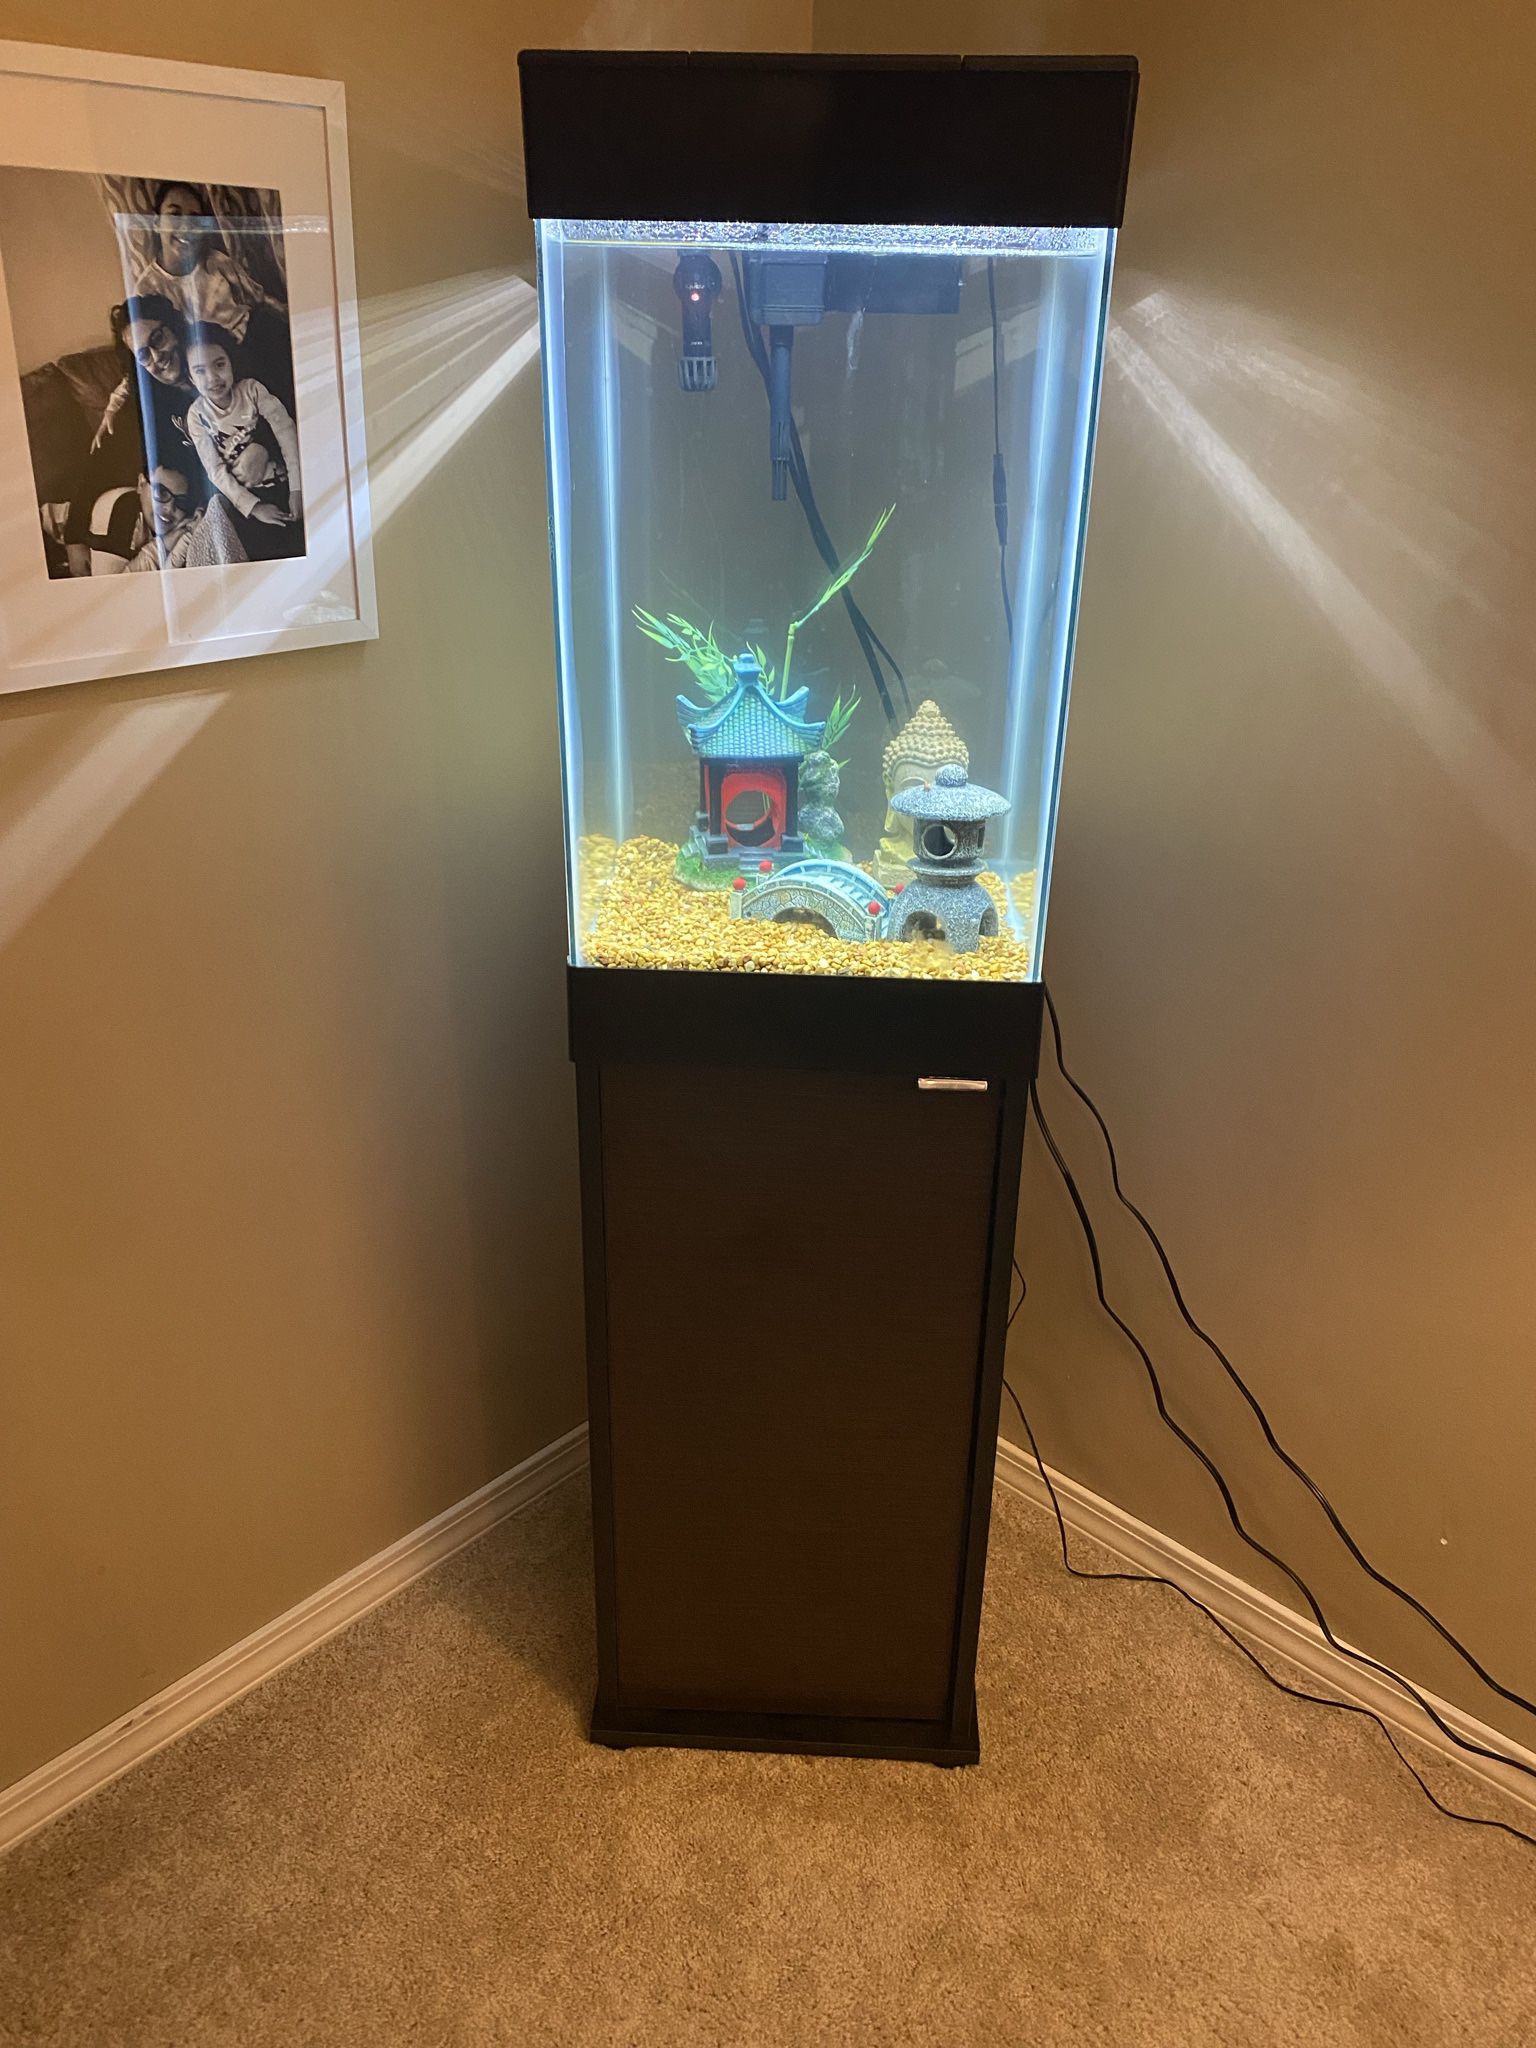 15 Gallon Fish Tank 